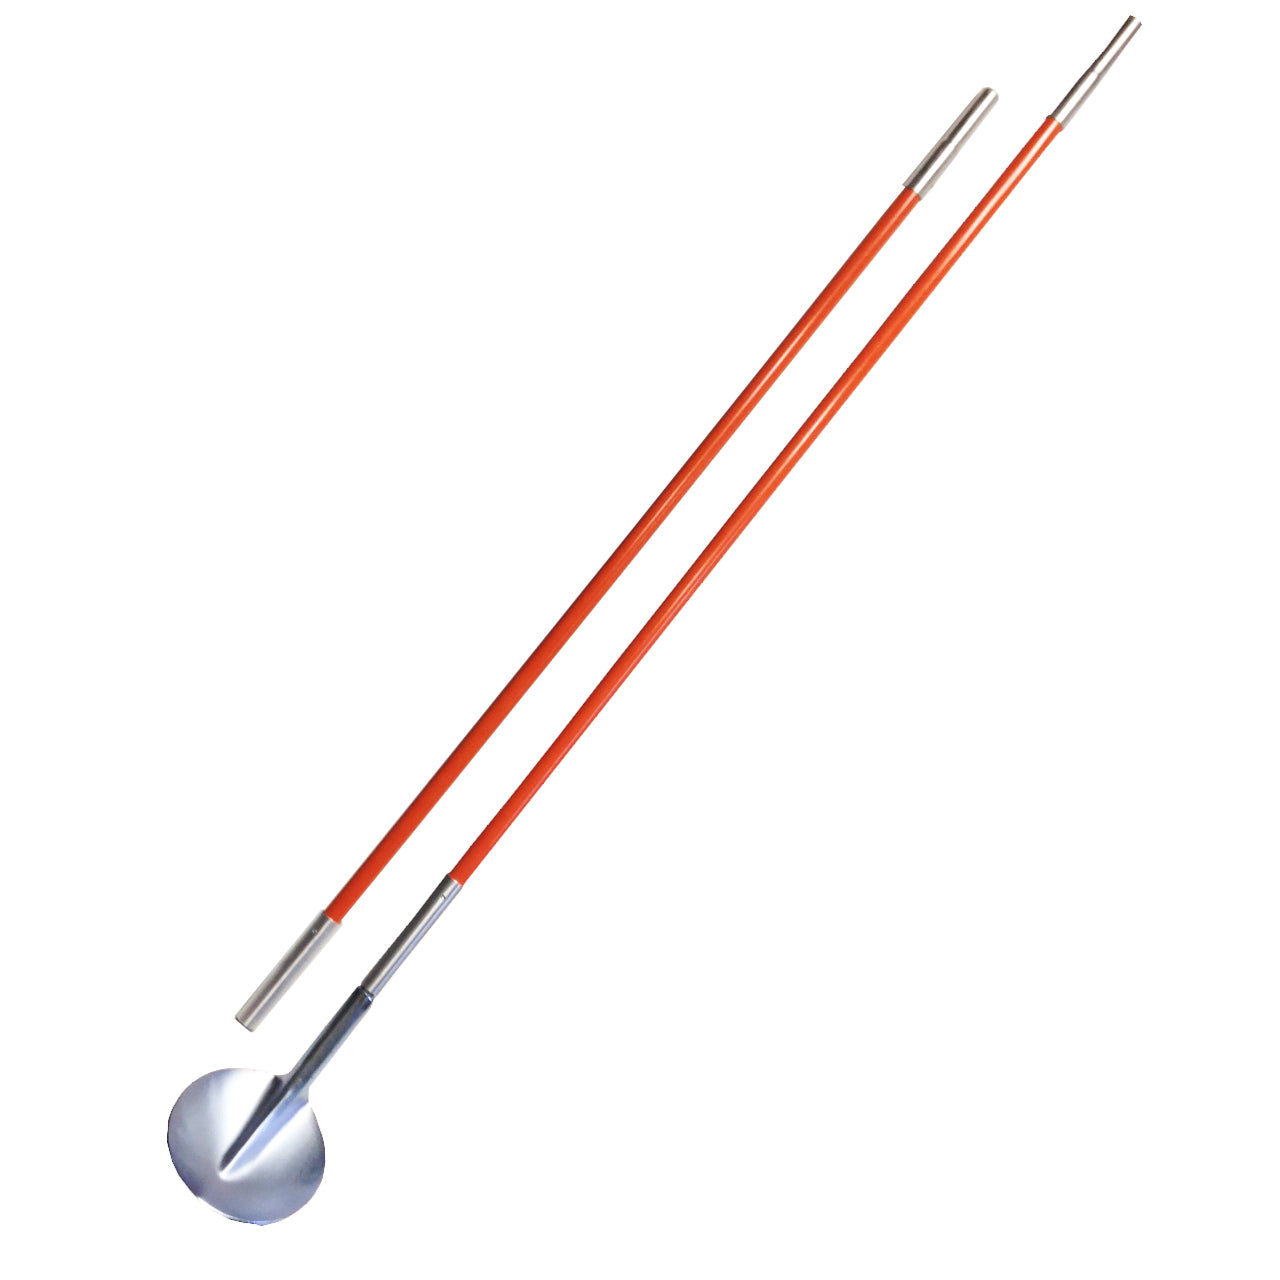 Sewer Spoon with Fiberglass Pole Handles